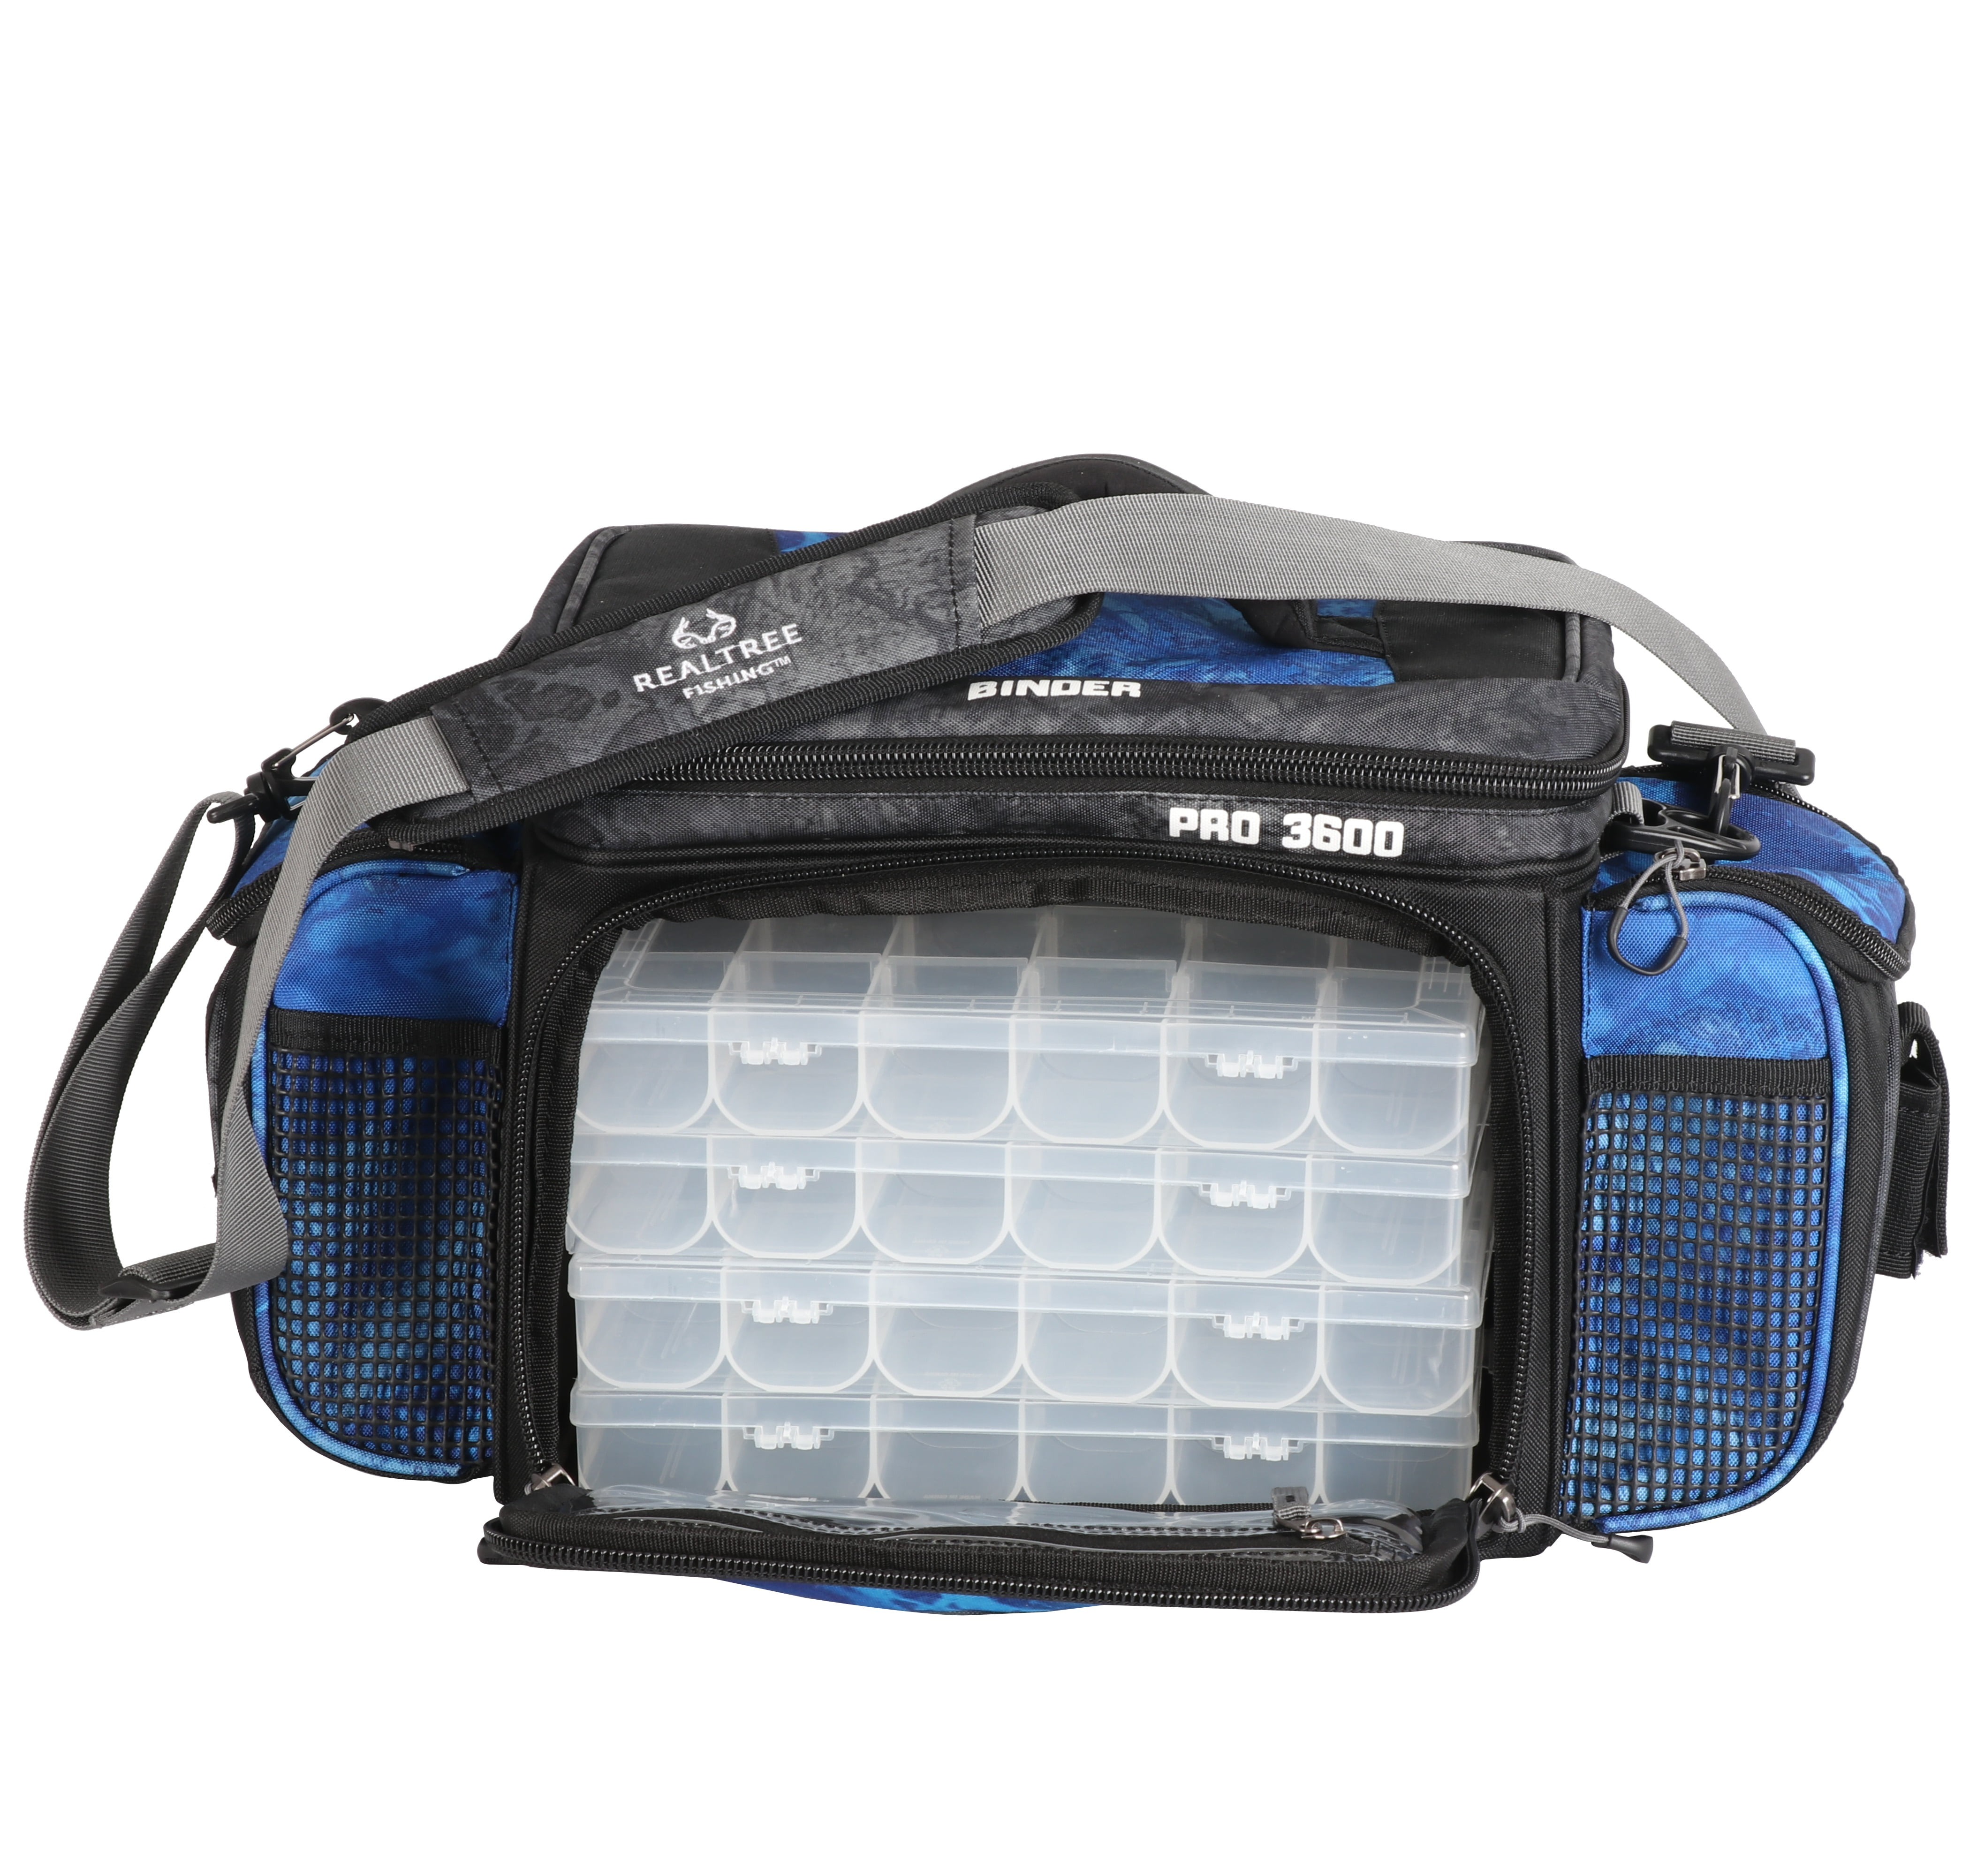 Realtree Adult Unisex Pro 3600 Fishing Tackle Box Binder Top Bag